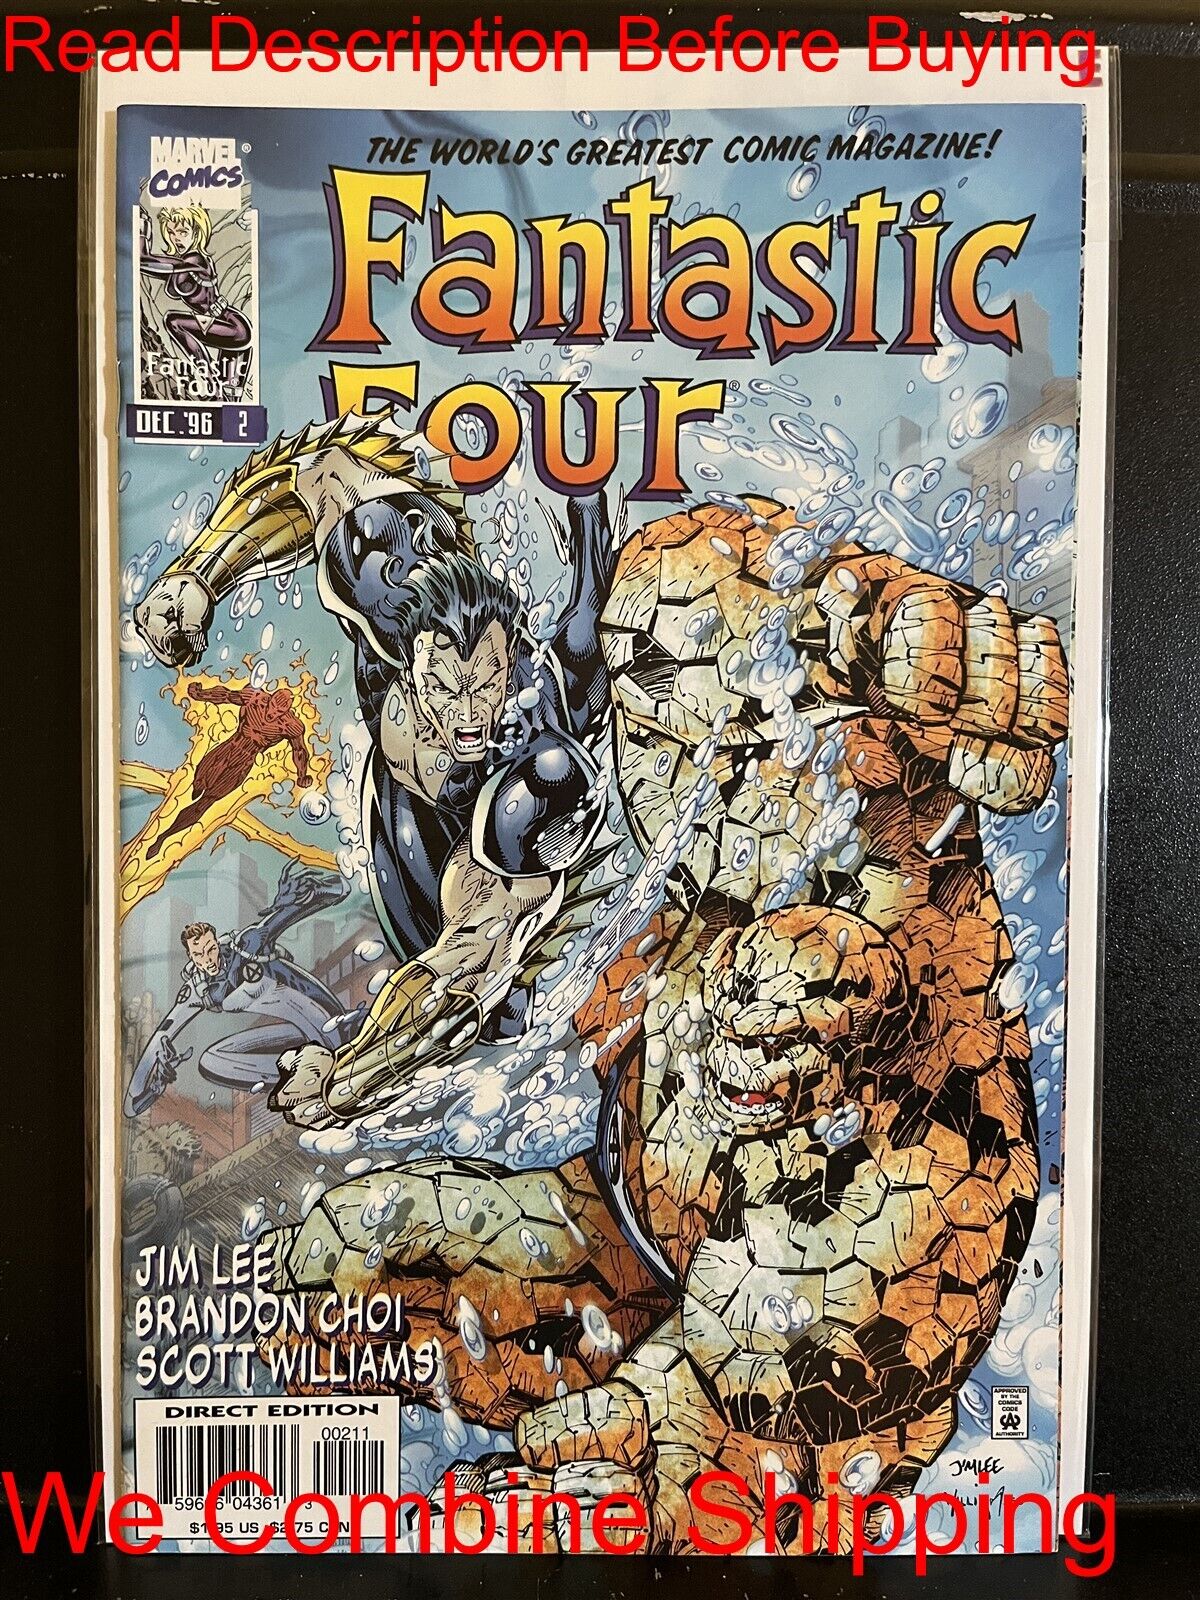 BARGAIN BOOKS ($5 MIN PURCHASE) Fantastic Four #2 (1996) We Combine Shipping